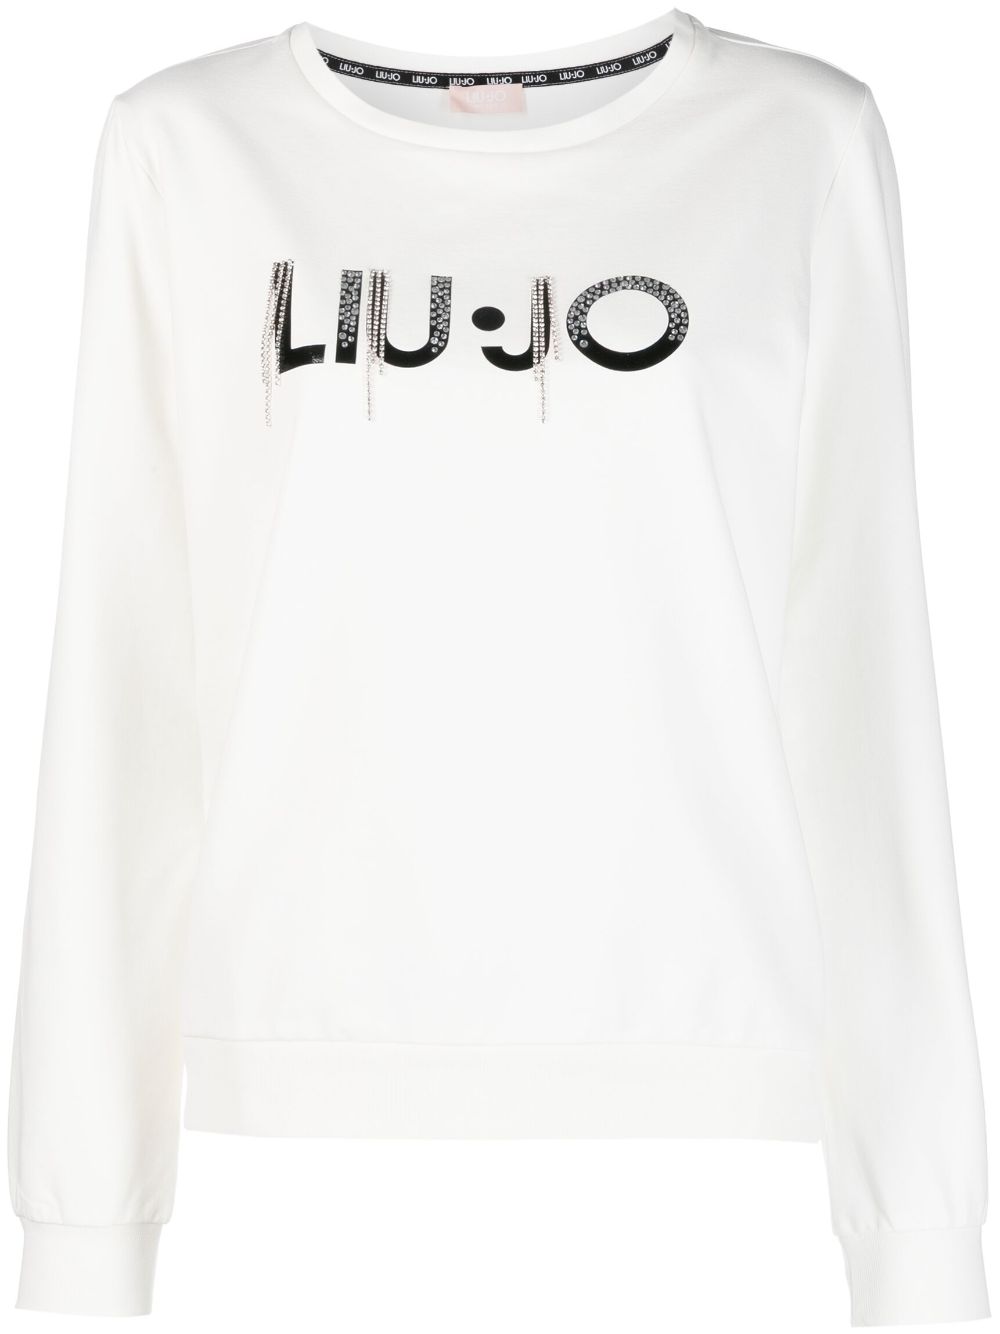 LIU JO crystal fringe logo sweatshirt - White von LIU JO